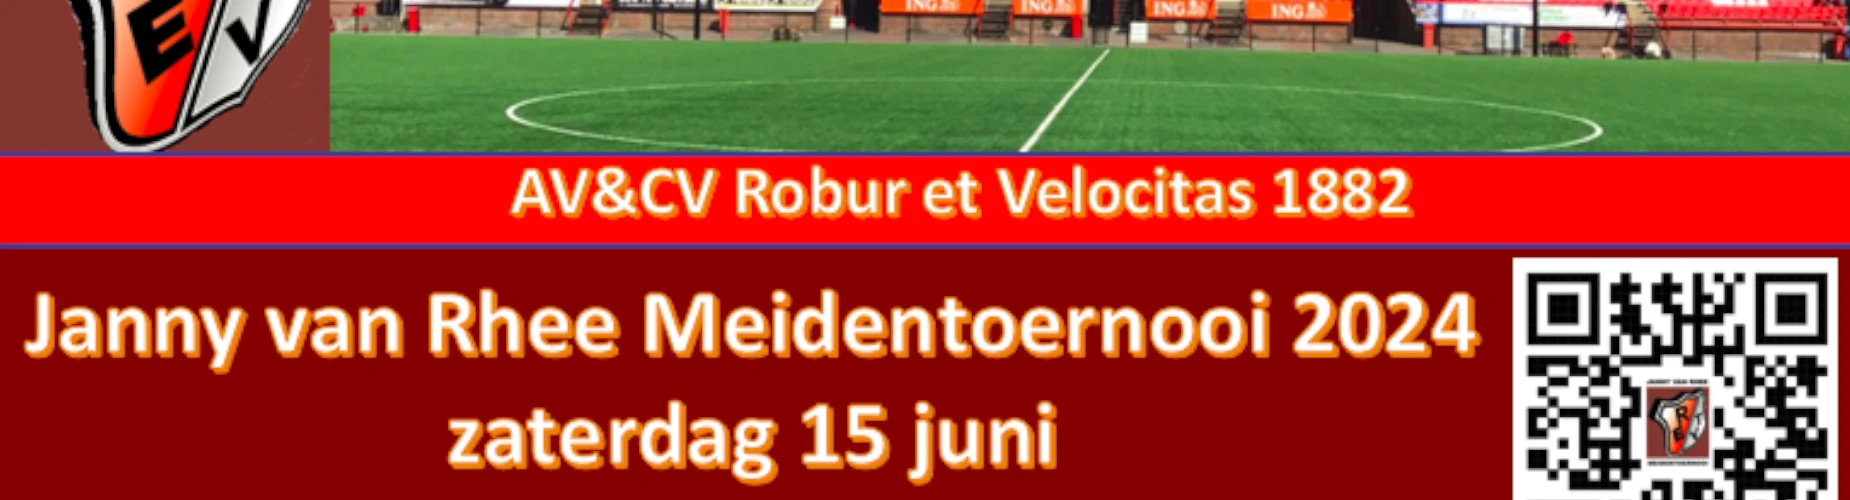 Banner - Janny van Rhee Meidentoernooi 2024 - Robur et Velocitas - Apeldoorn